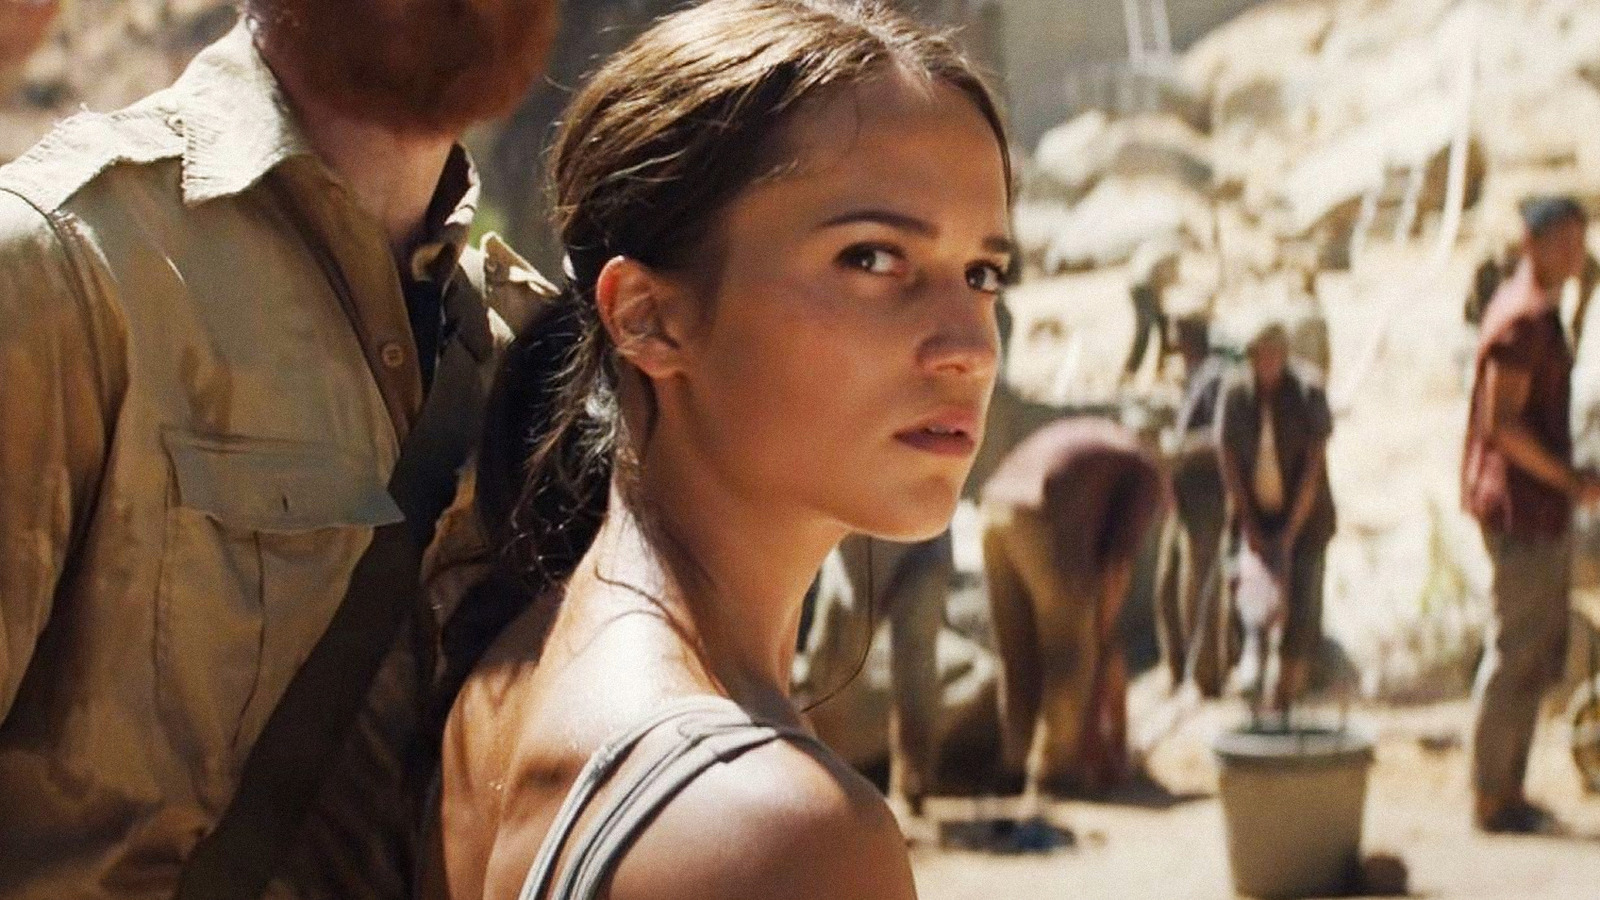 Tomb Raider 2: Updates About Sequel From Alicia Vikander - FandomWire